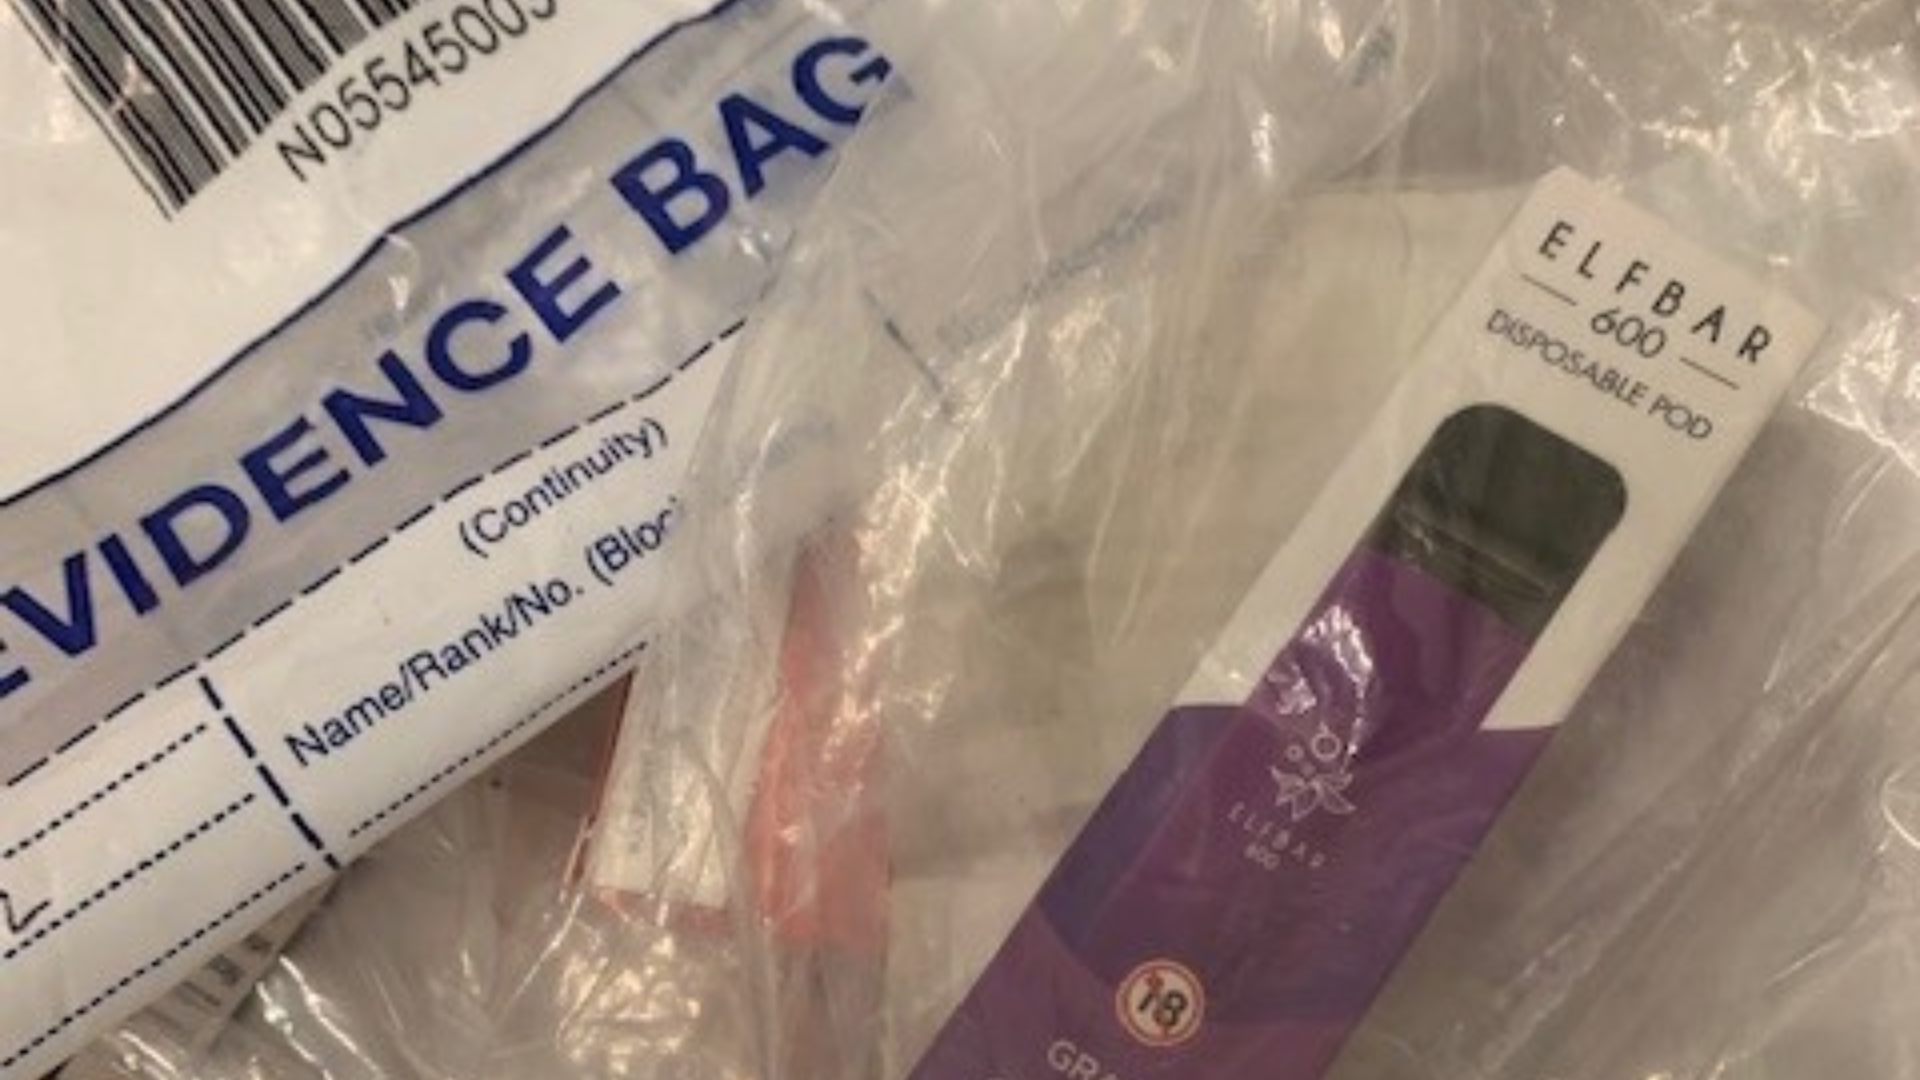 A grape elf bar vape in a bag next to an evidence bag